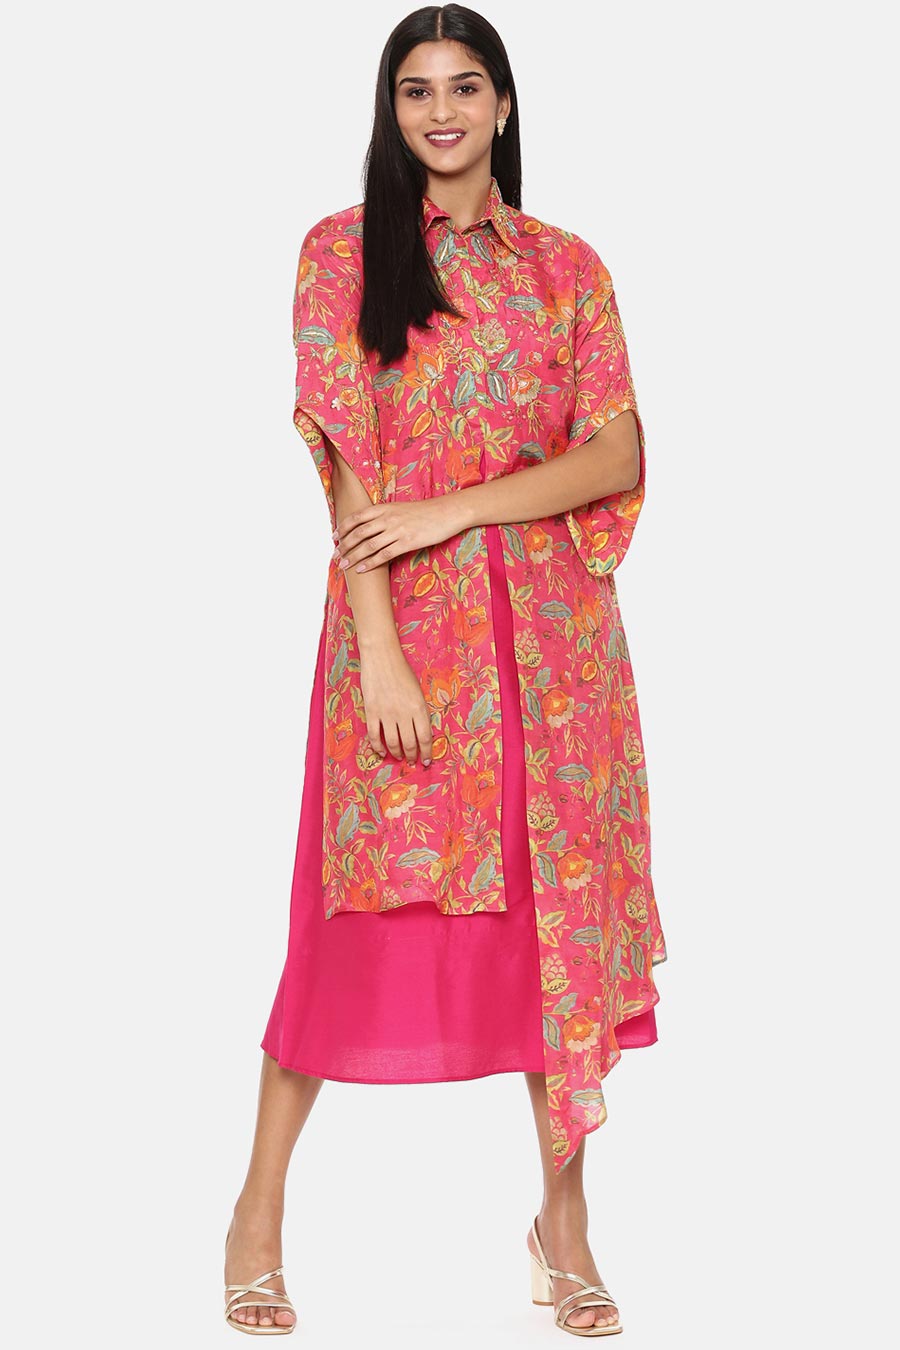 Shop Pink Floral Print Dress by ASMI BY MAYANK MODI at House of ...